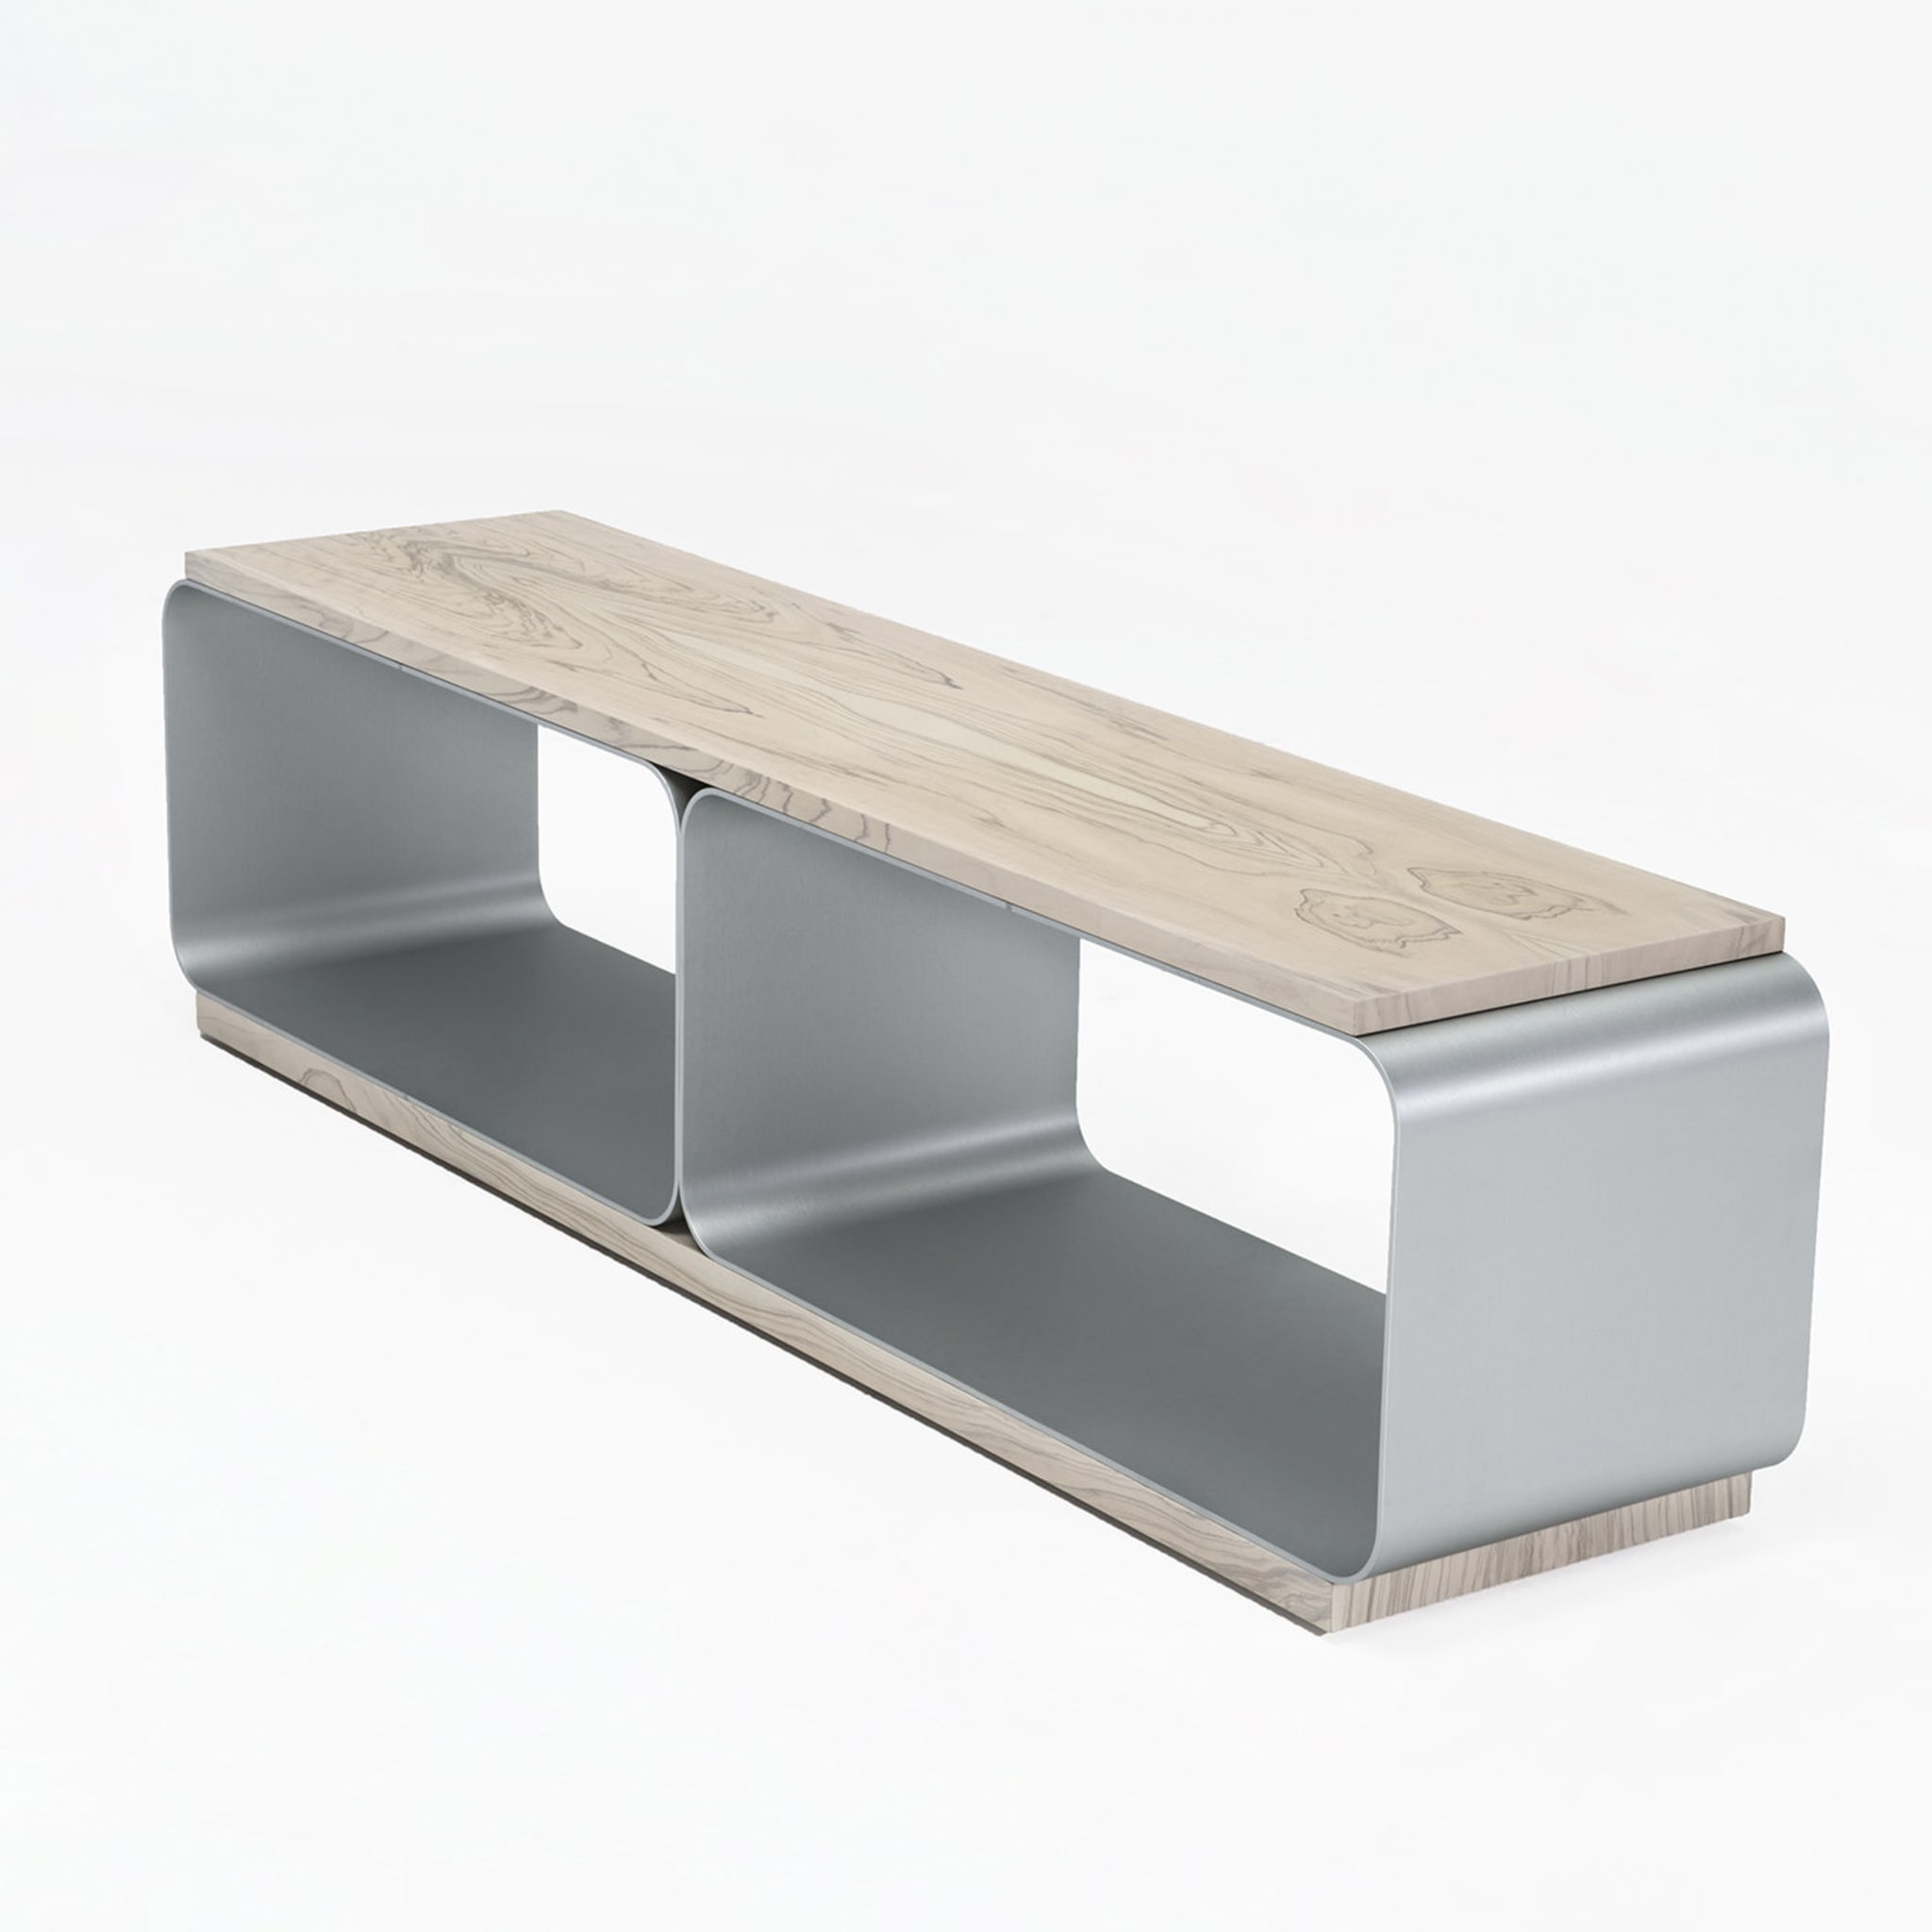 Vista Olive-Wood Bench by Michael Schoeller - Alternative view 1